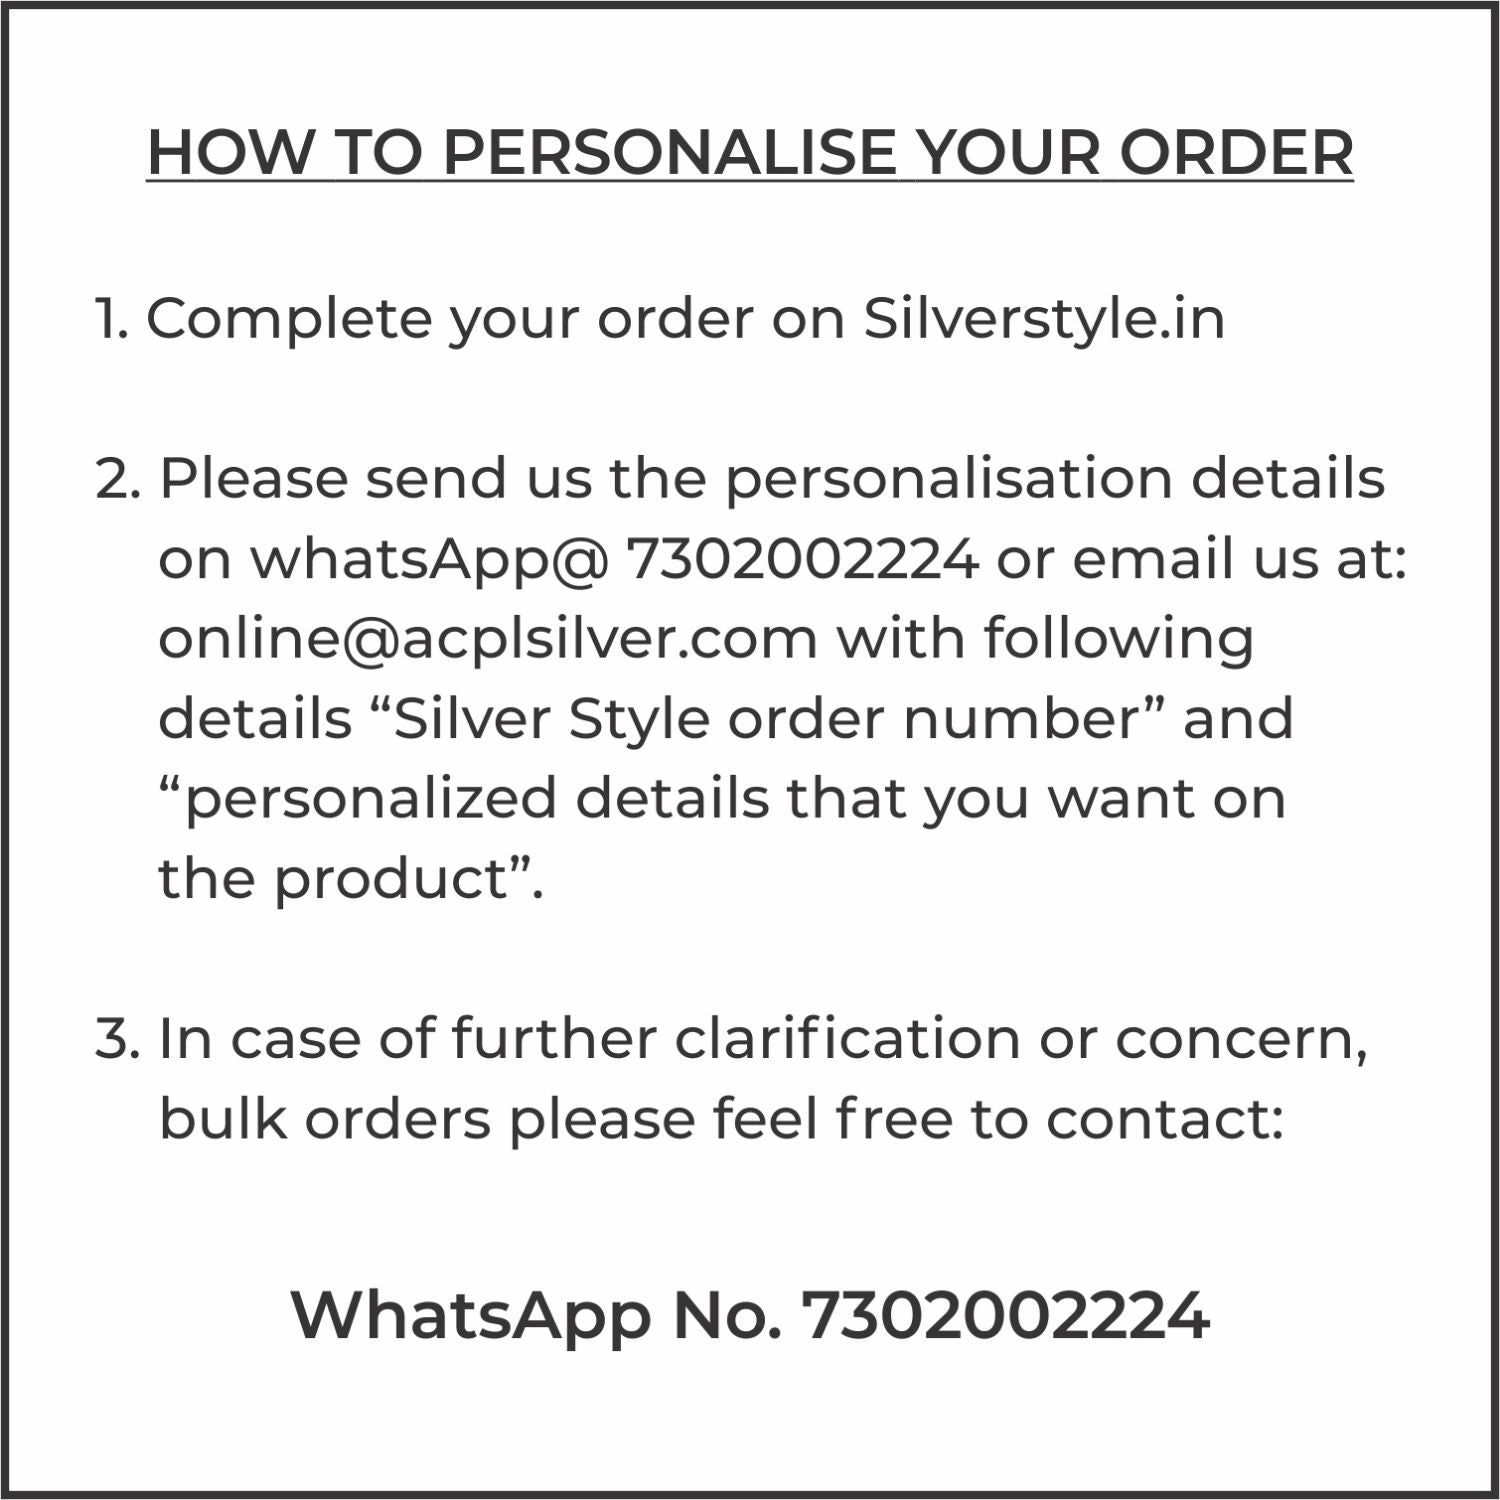 925 Sterling Silver Personalised Name Threader Earrings for Teen Women